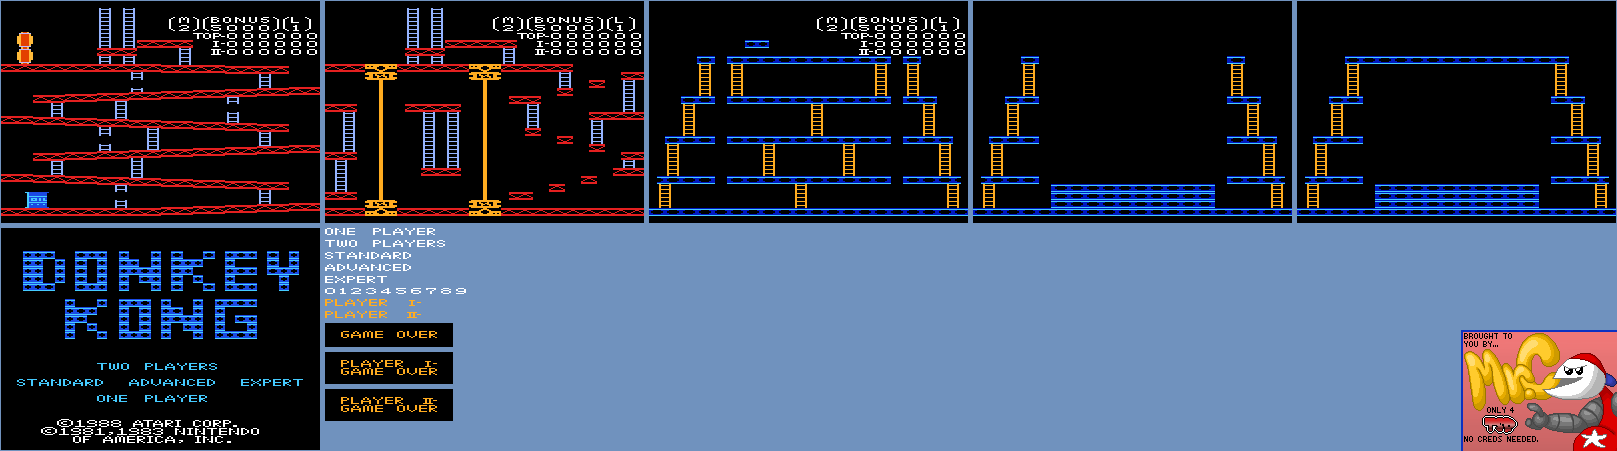 Donkey Kong (Atari 7800) - Backgrounds